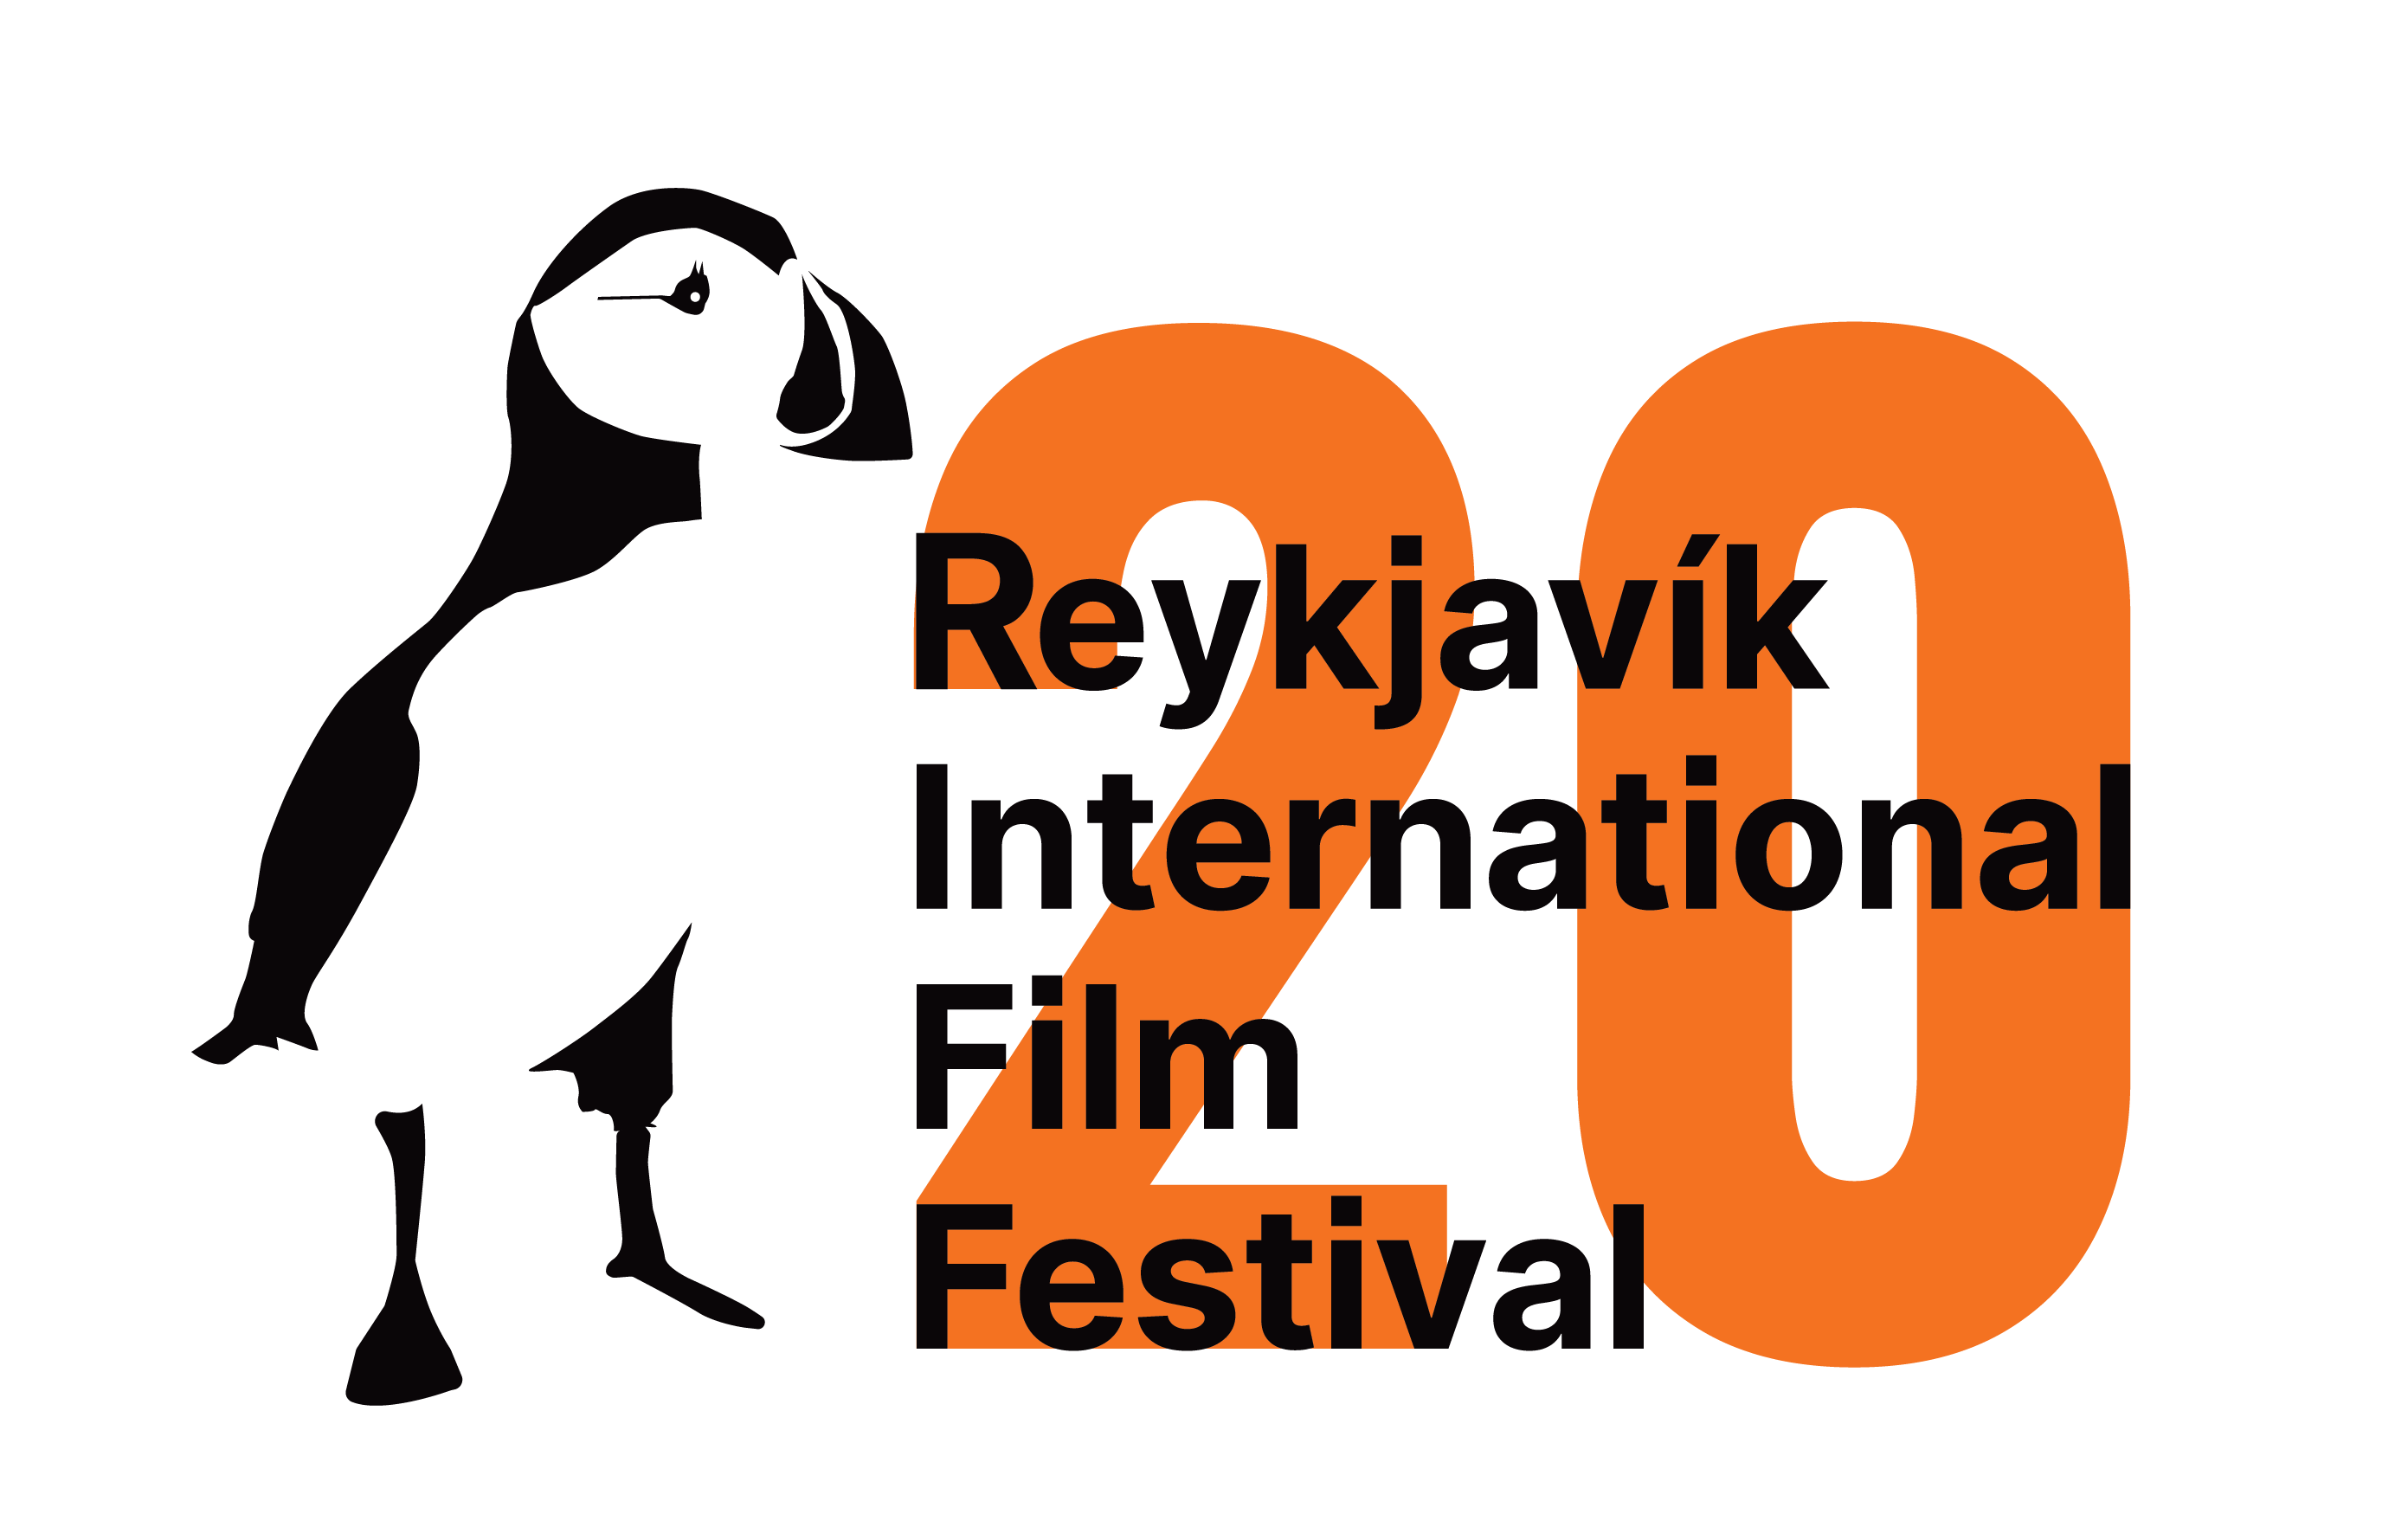 Reykjavík International Film Festival logo 